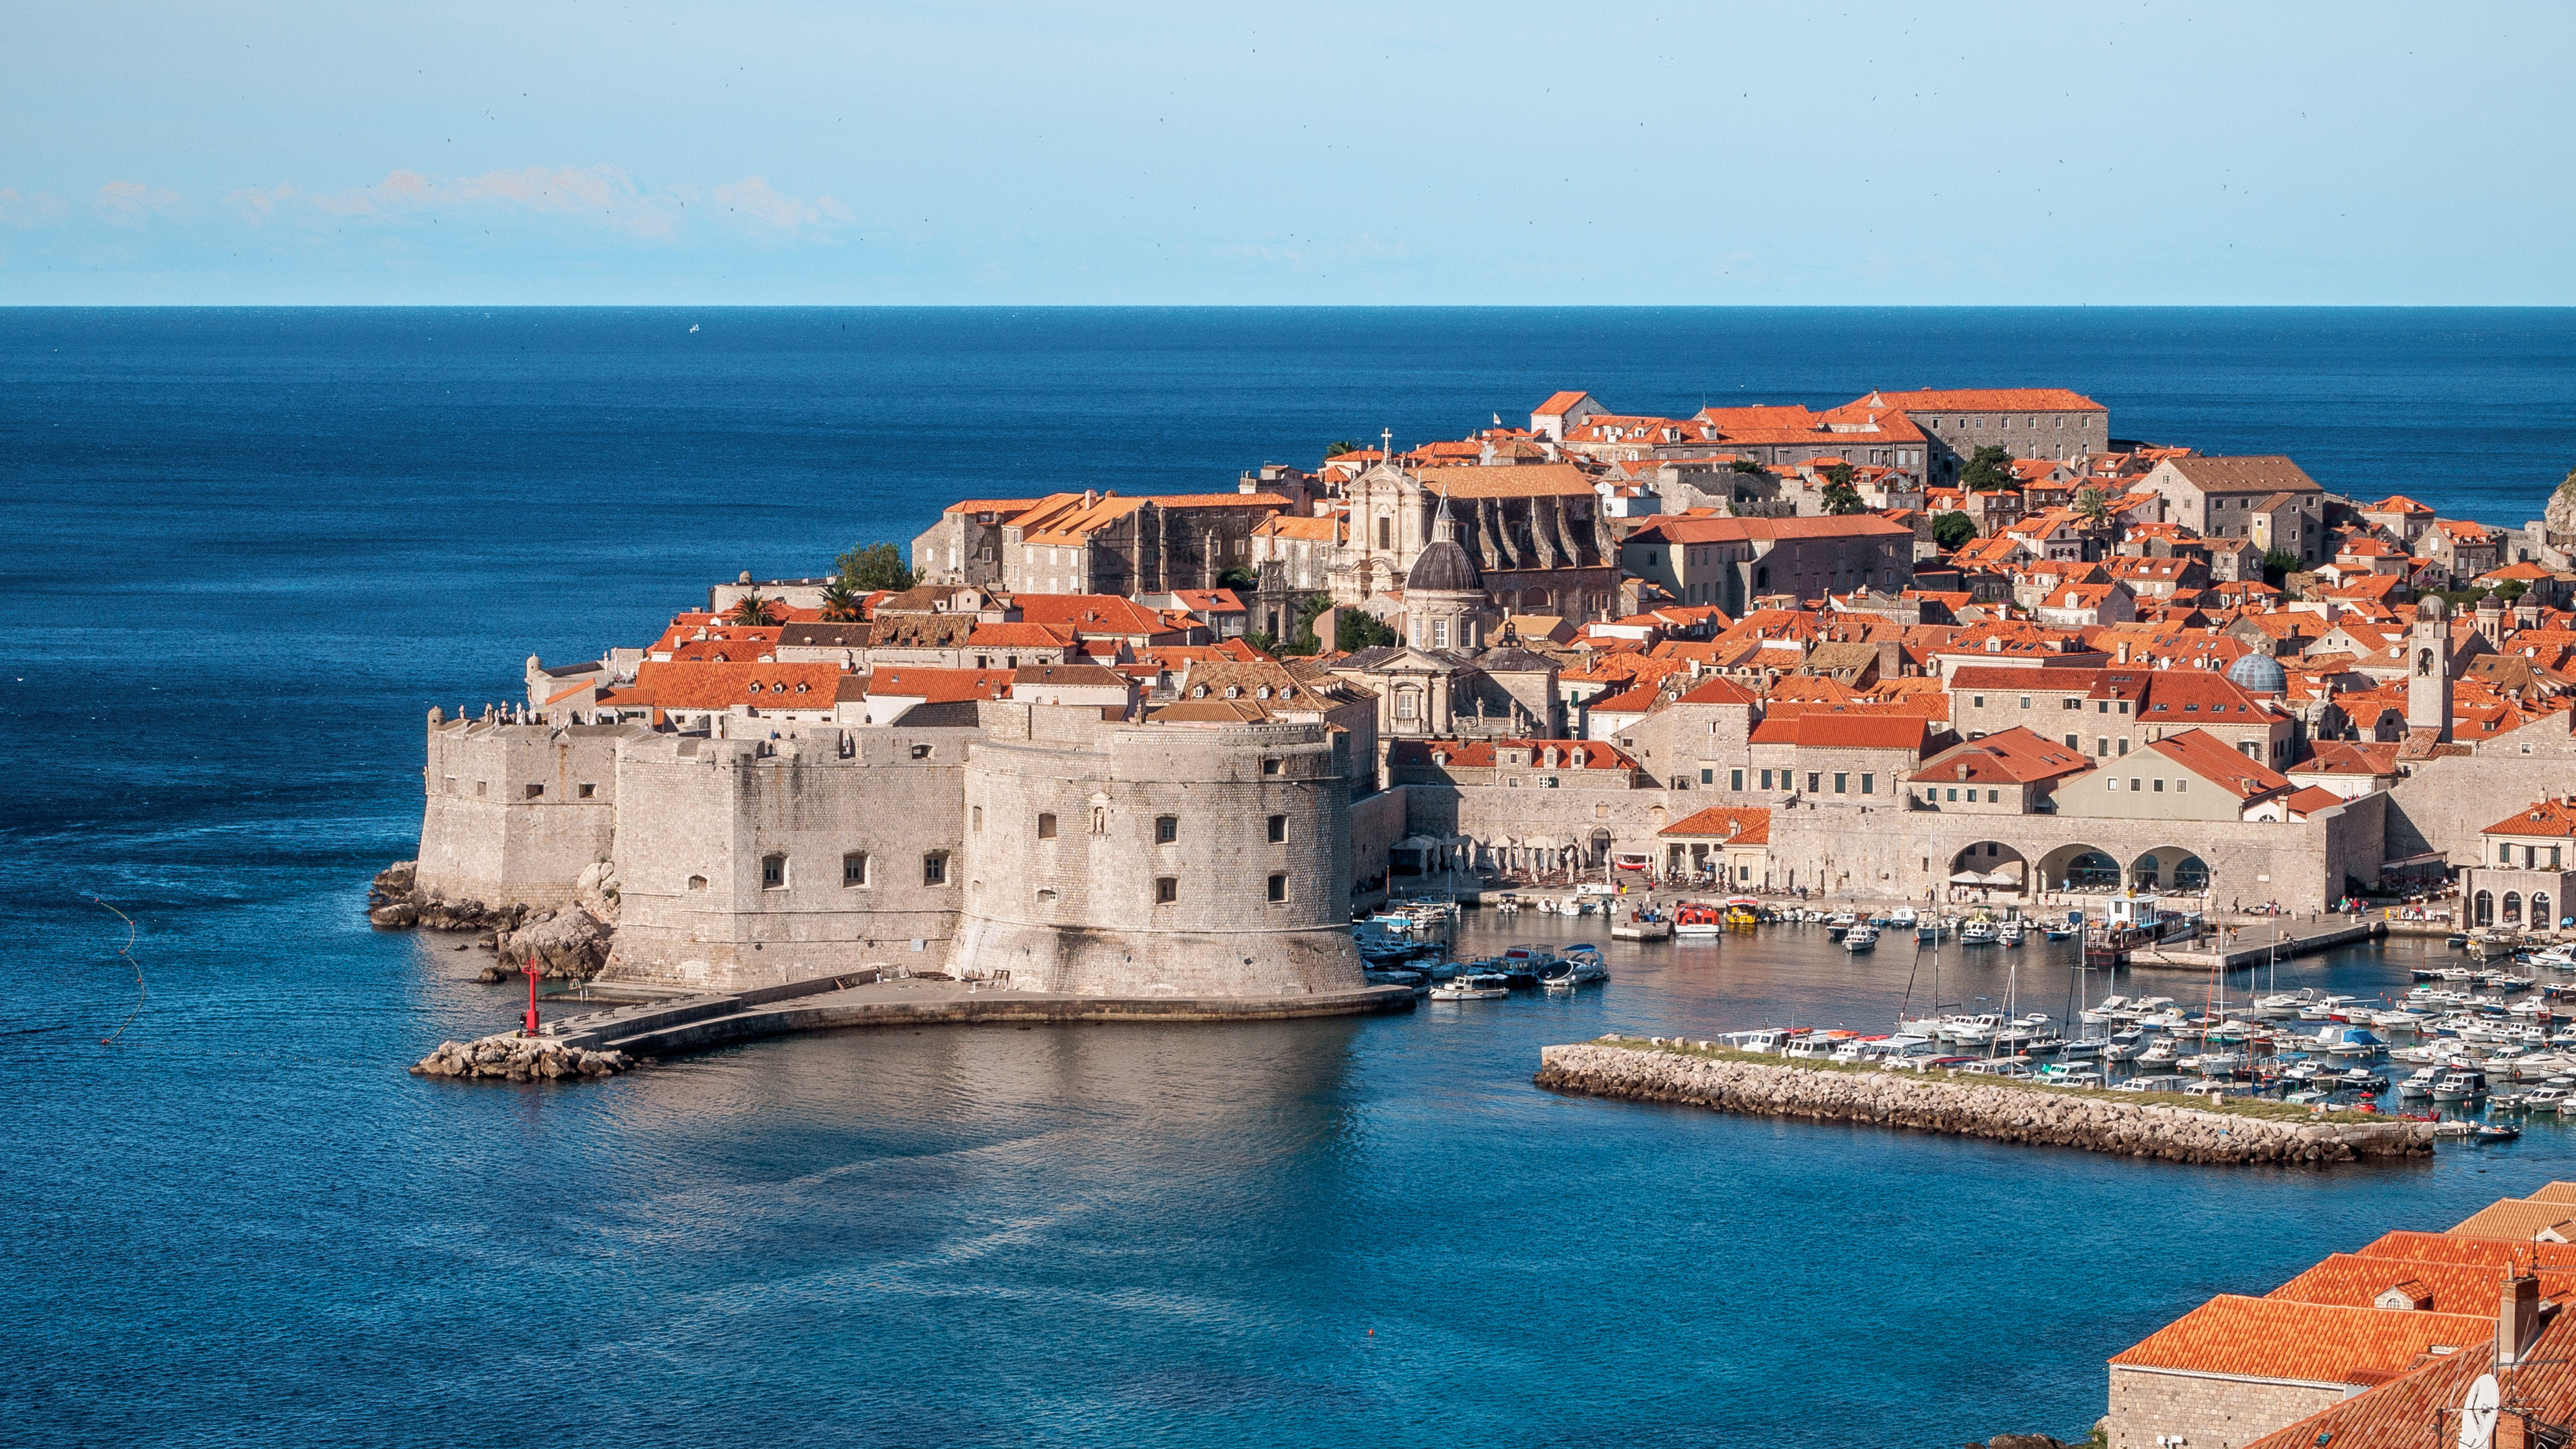 View of King's landing in Dubrovnik, Croatia image - Free stock ...